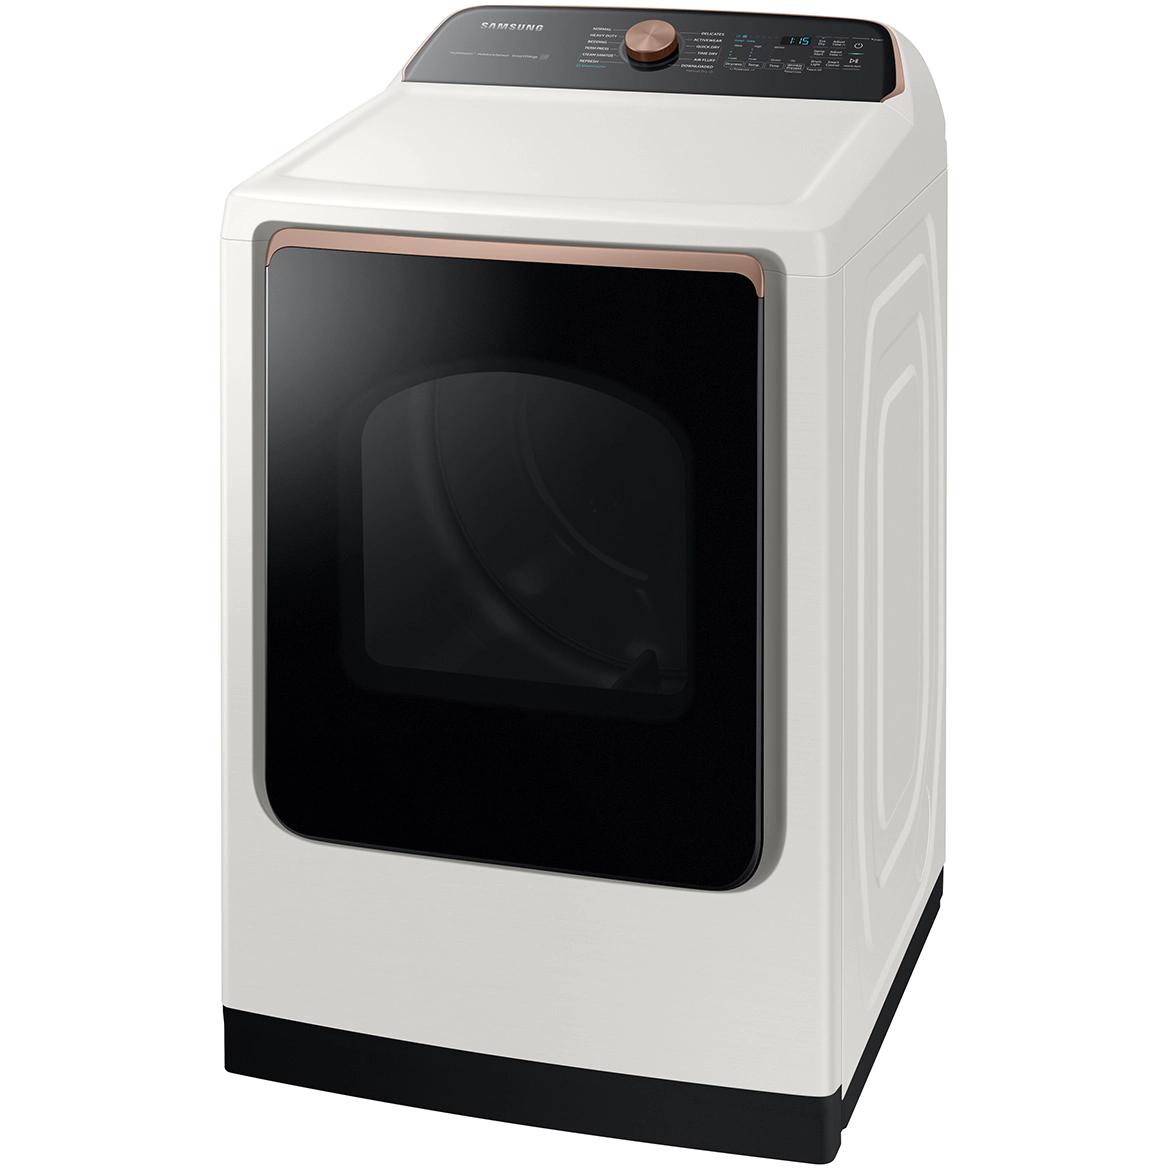 Samsung 7.4 cu.ft. Gas Dryer with Steam Sanitize+ DVG55A7300E/A3